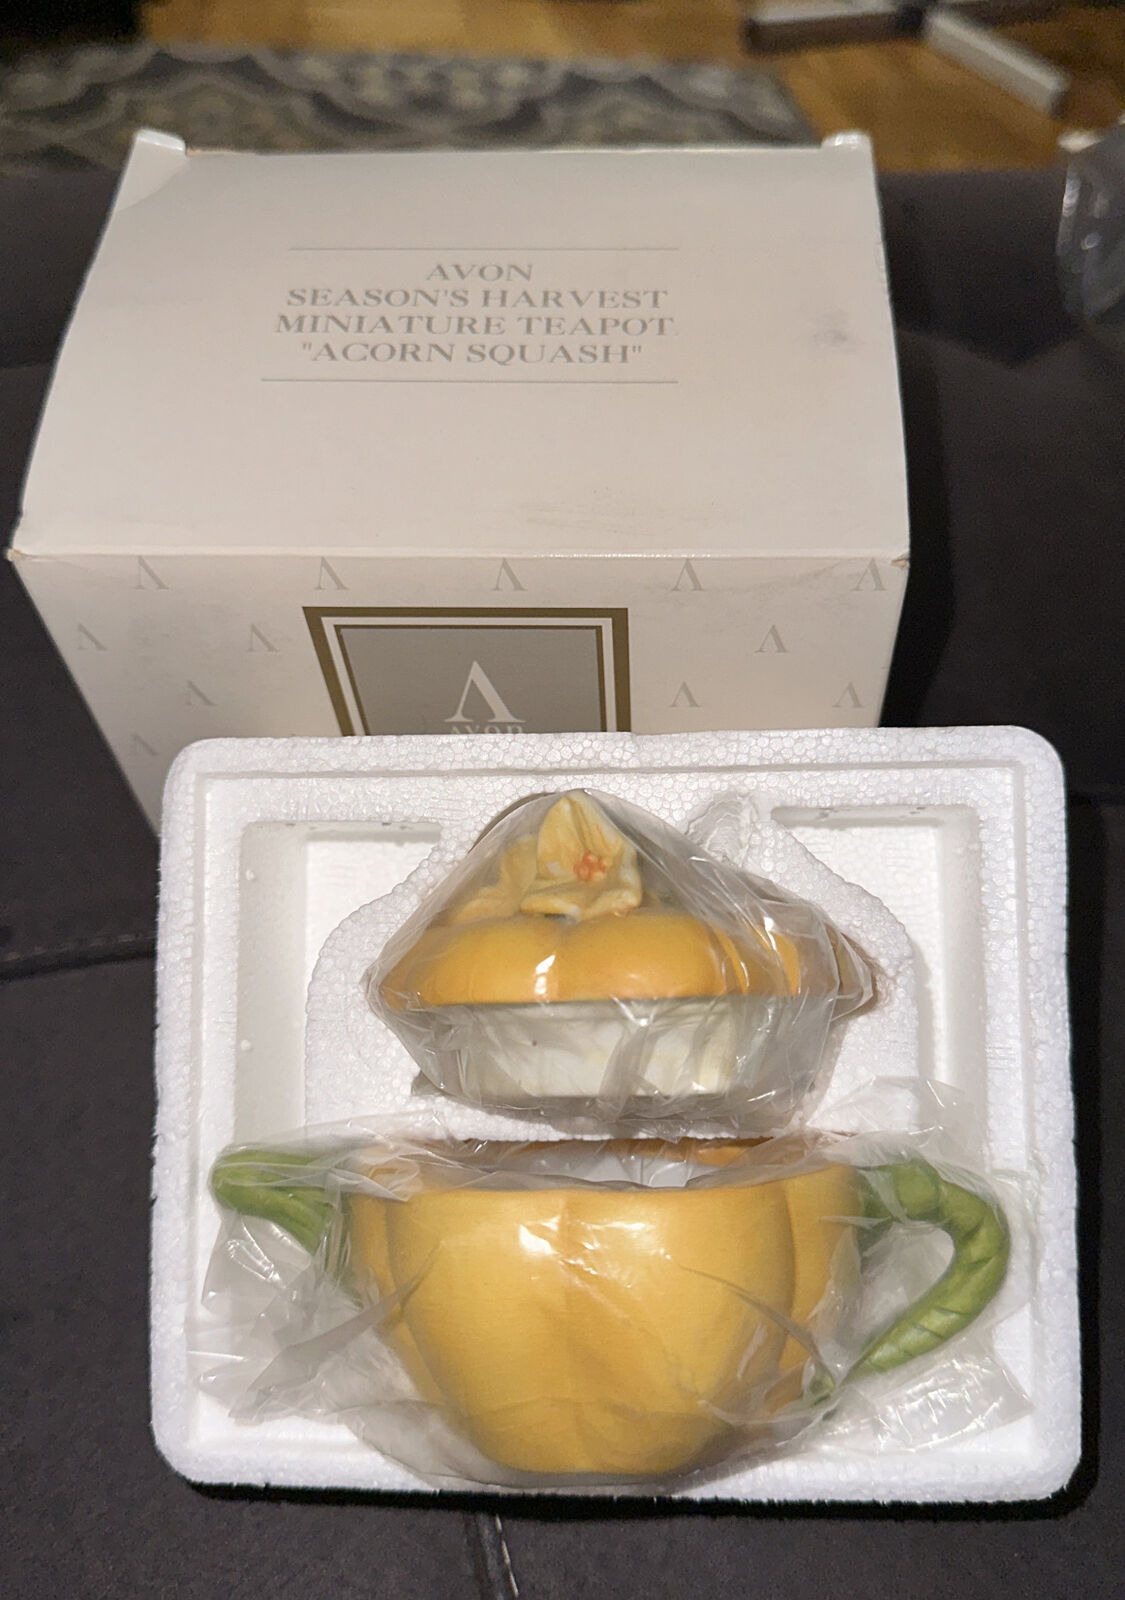 Avon Seasons Harvest Miniature Teapot Acorn Squash